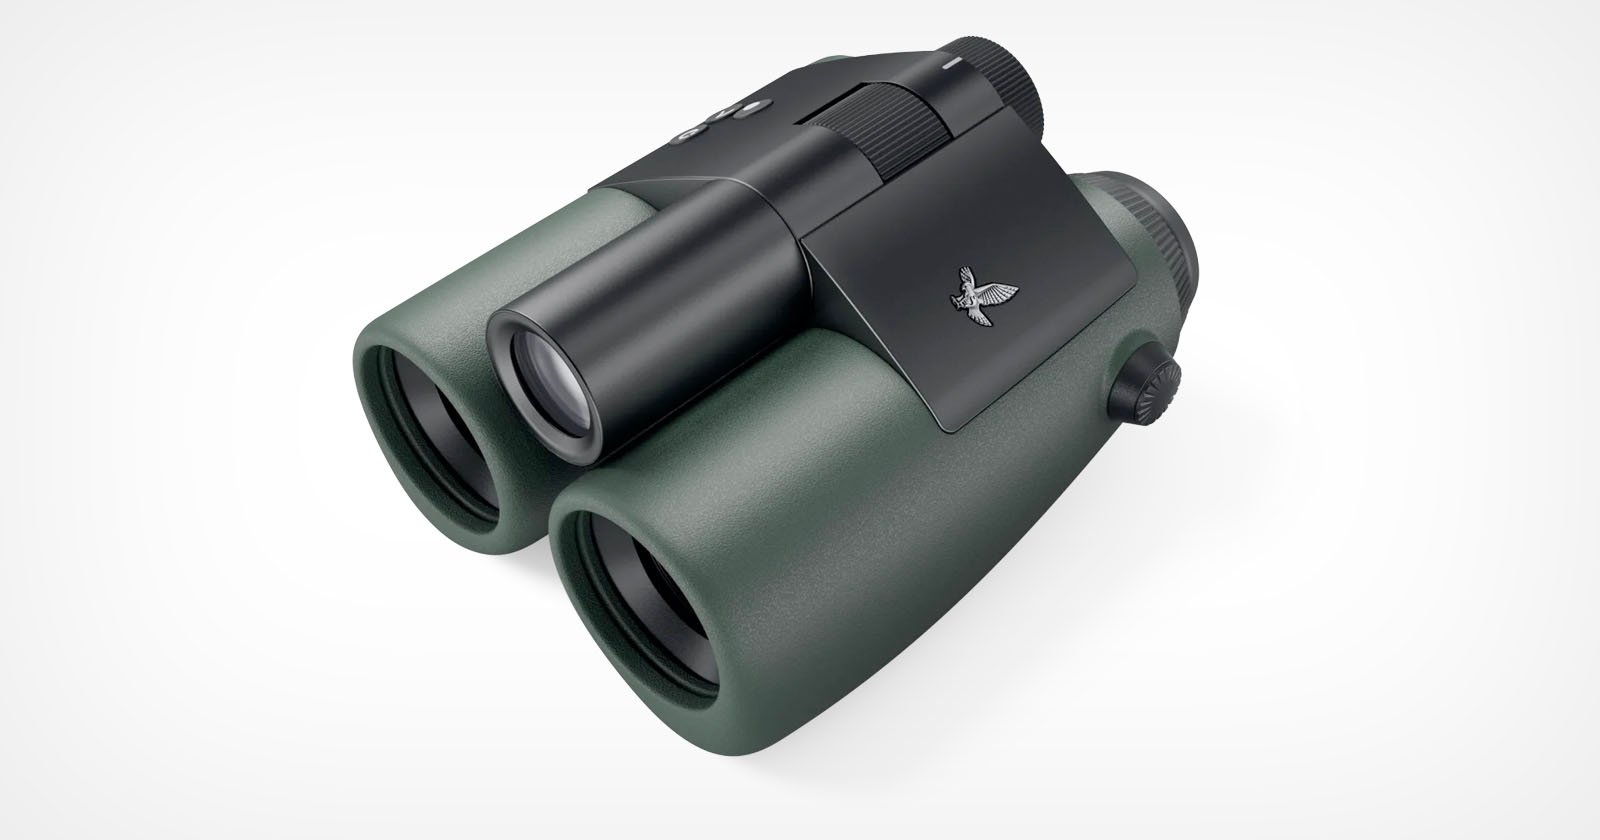 Swarovskis AX Visio Binoculars Are Also an AI-Powered 13MP Camera